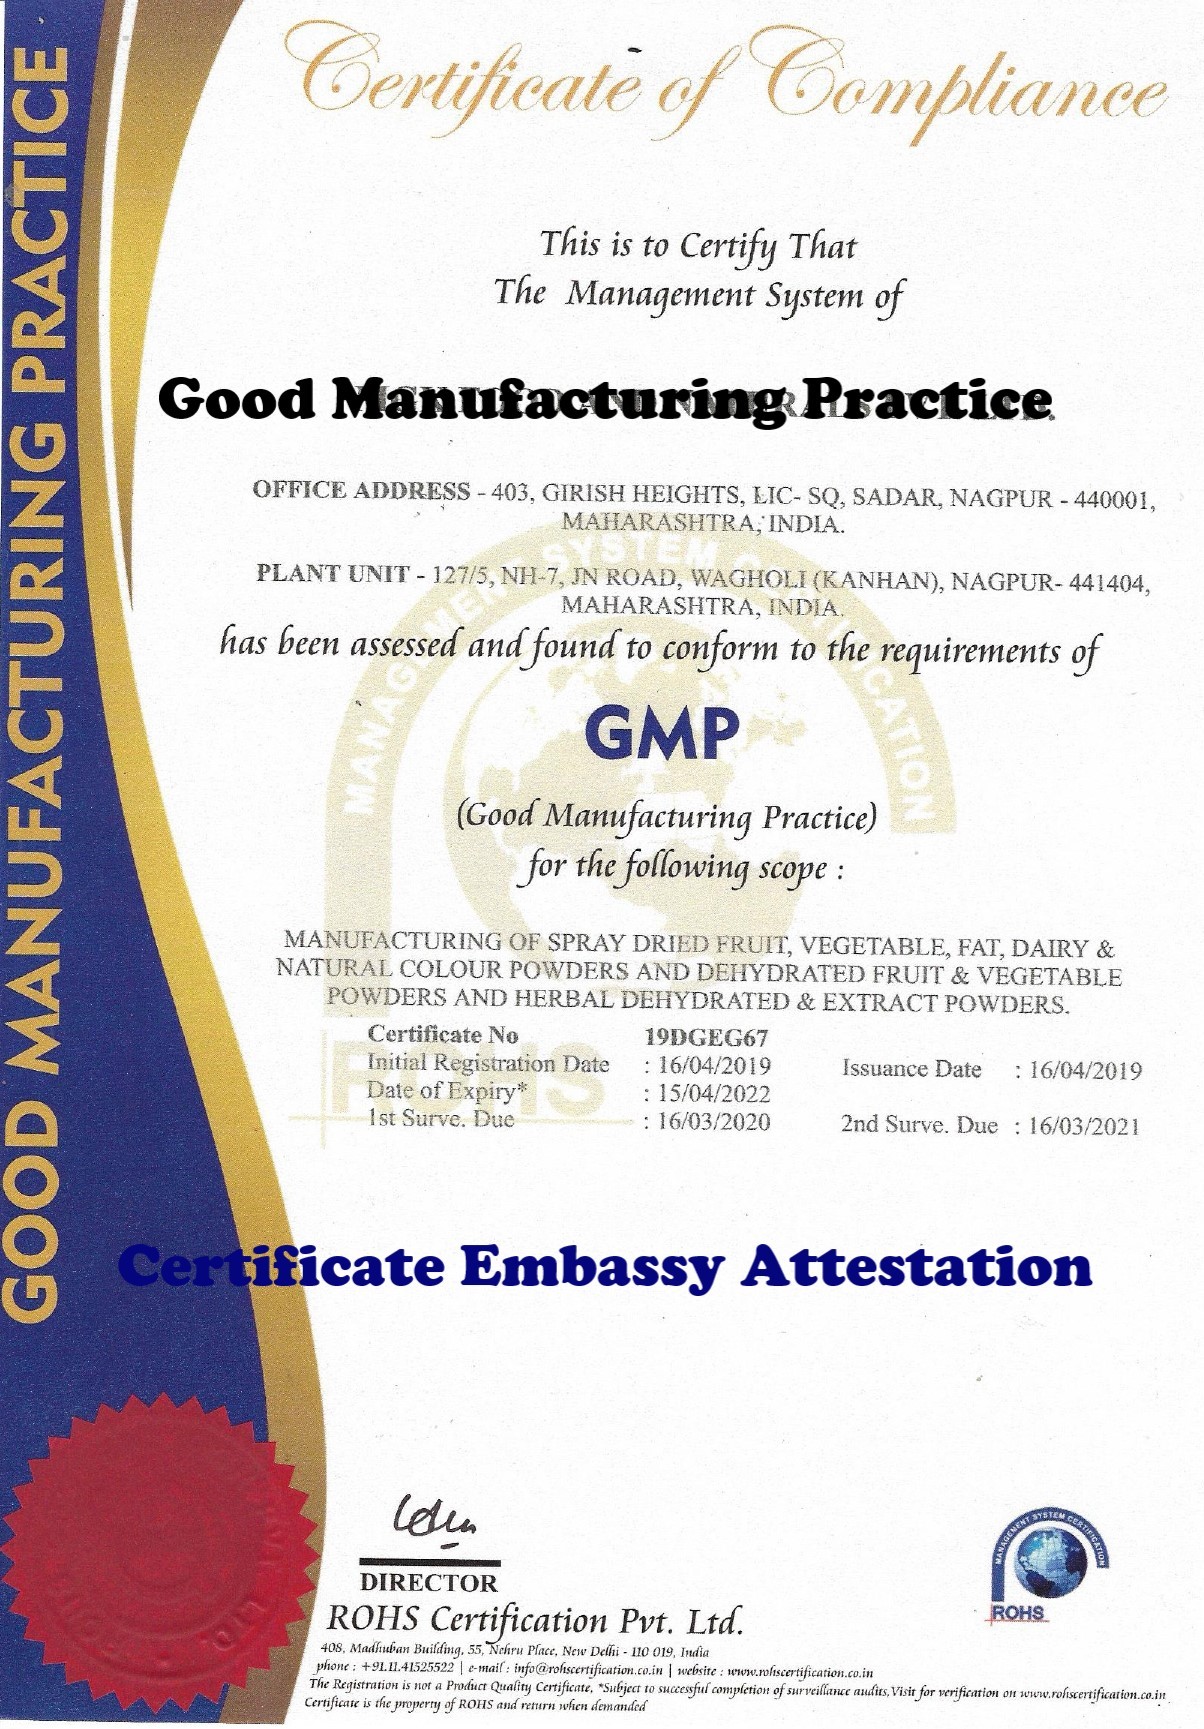 GMP Certificate Attestation from Brazil Embassy